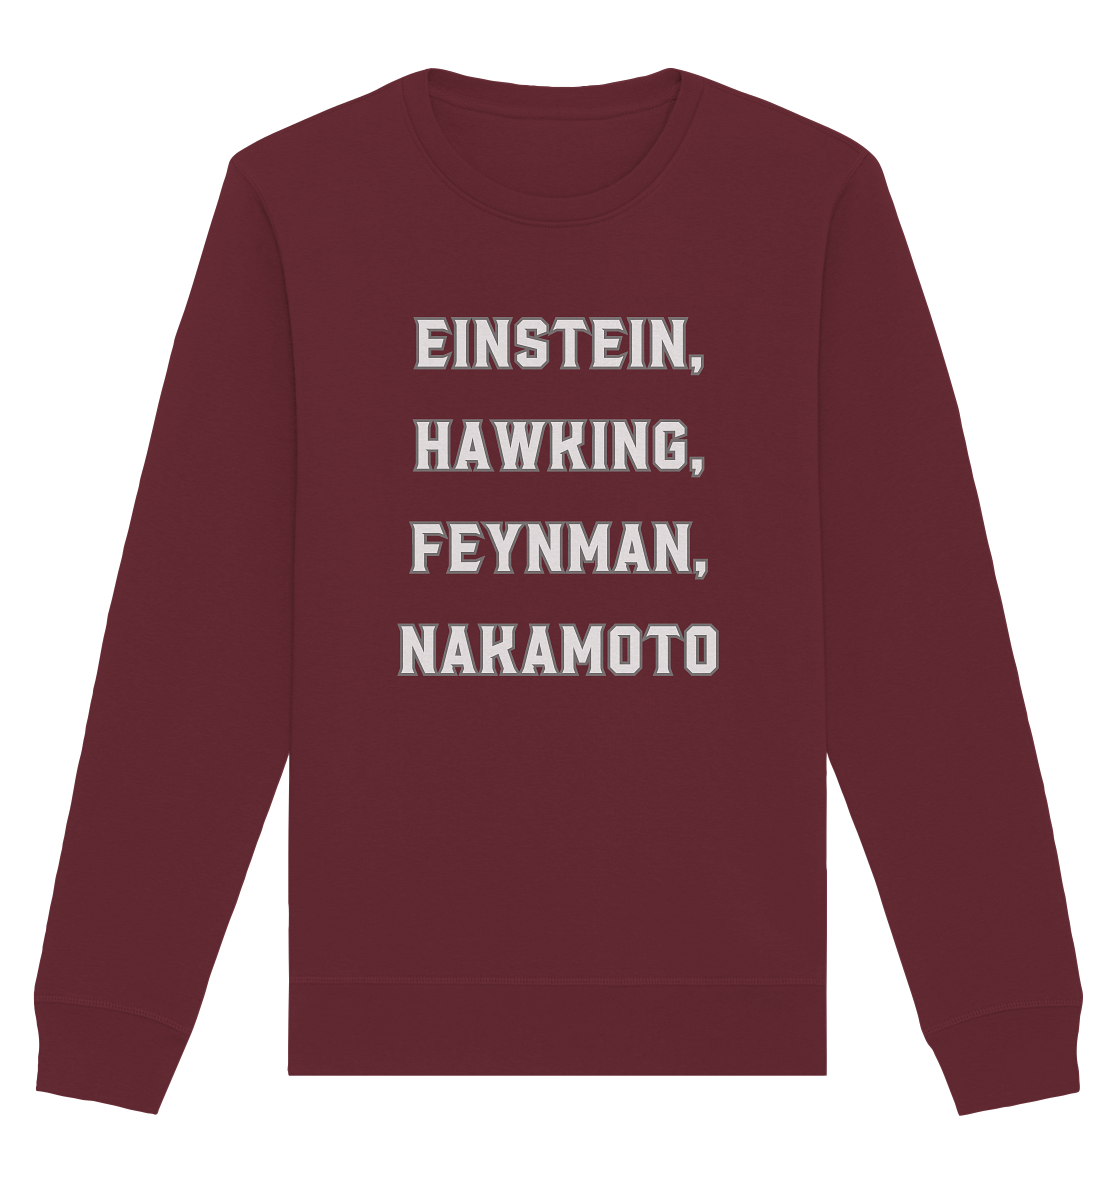 EINSTEIN, HAWKING, FEYNMAN, NAKAMOTO - Organic Basic Unisex Sweatshirt